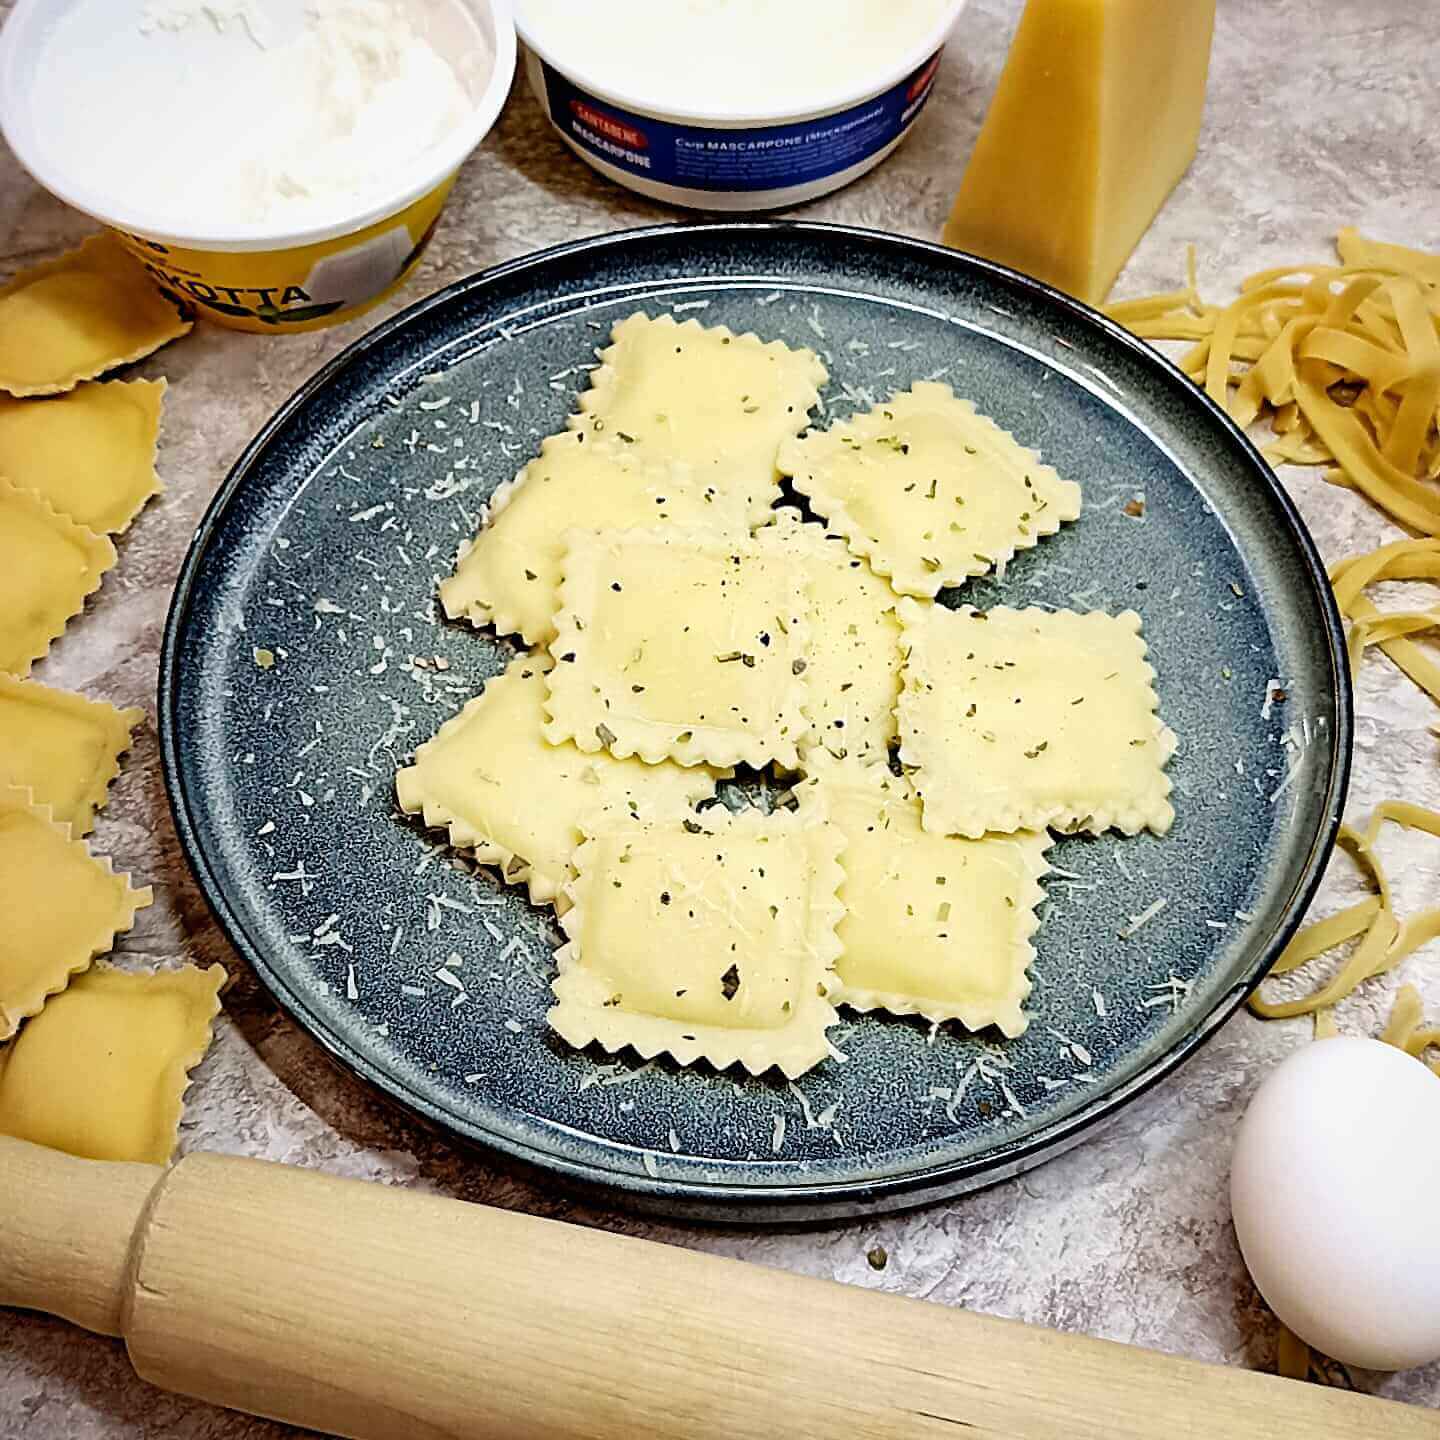 Cheese ravioli